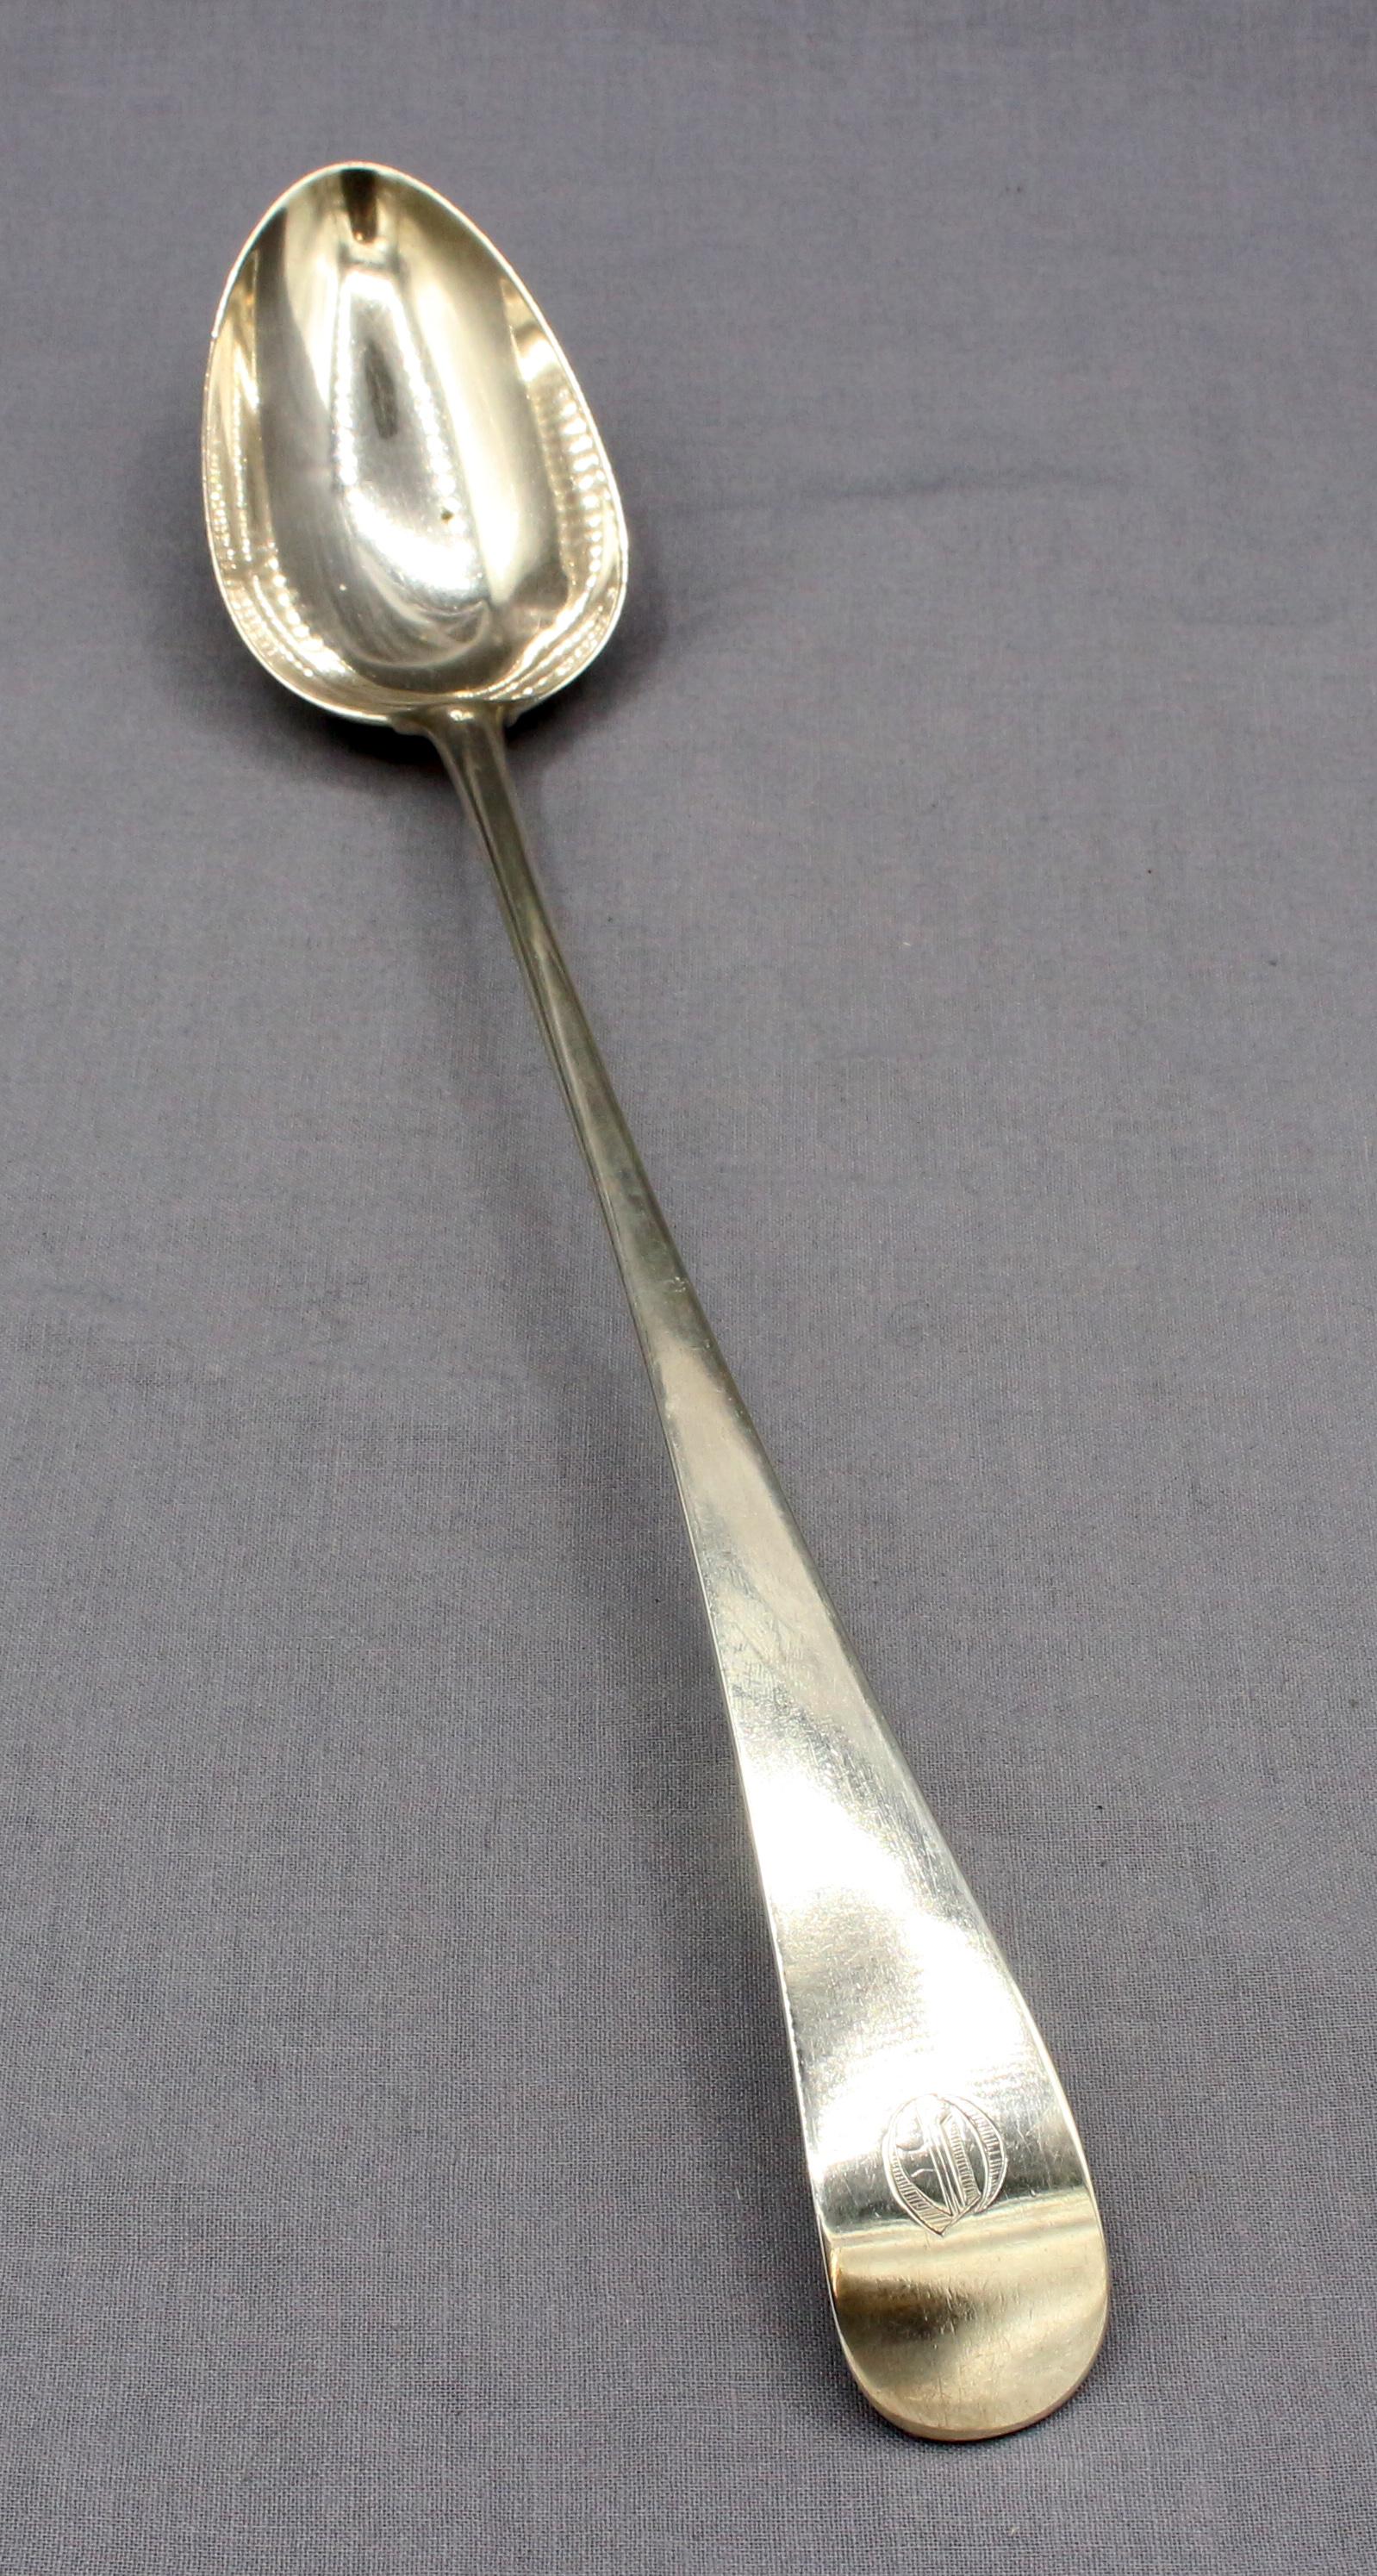 A 1790 sterling basting spoon, London, Old English pattern by Thomas Liddiard(?). 